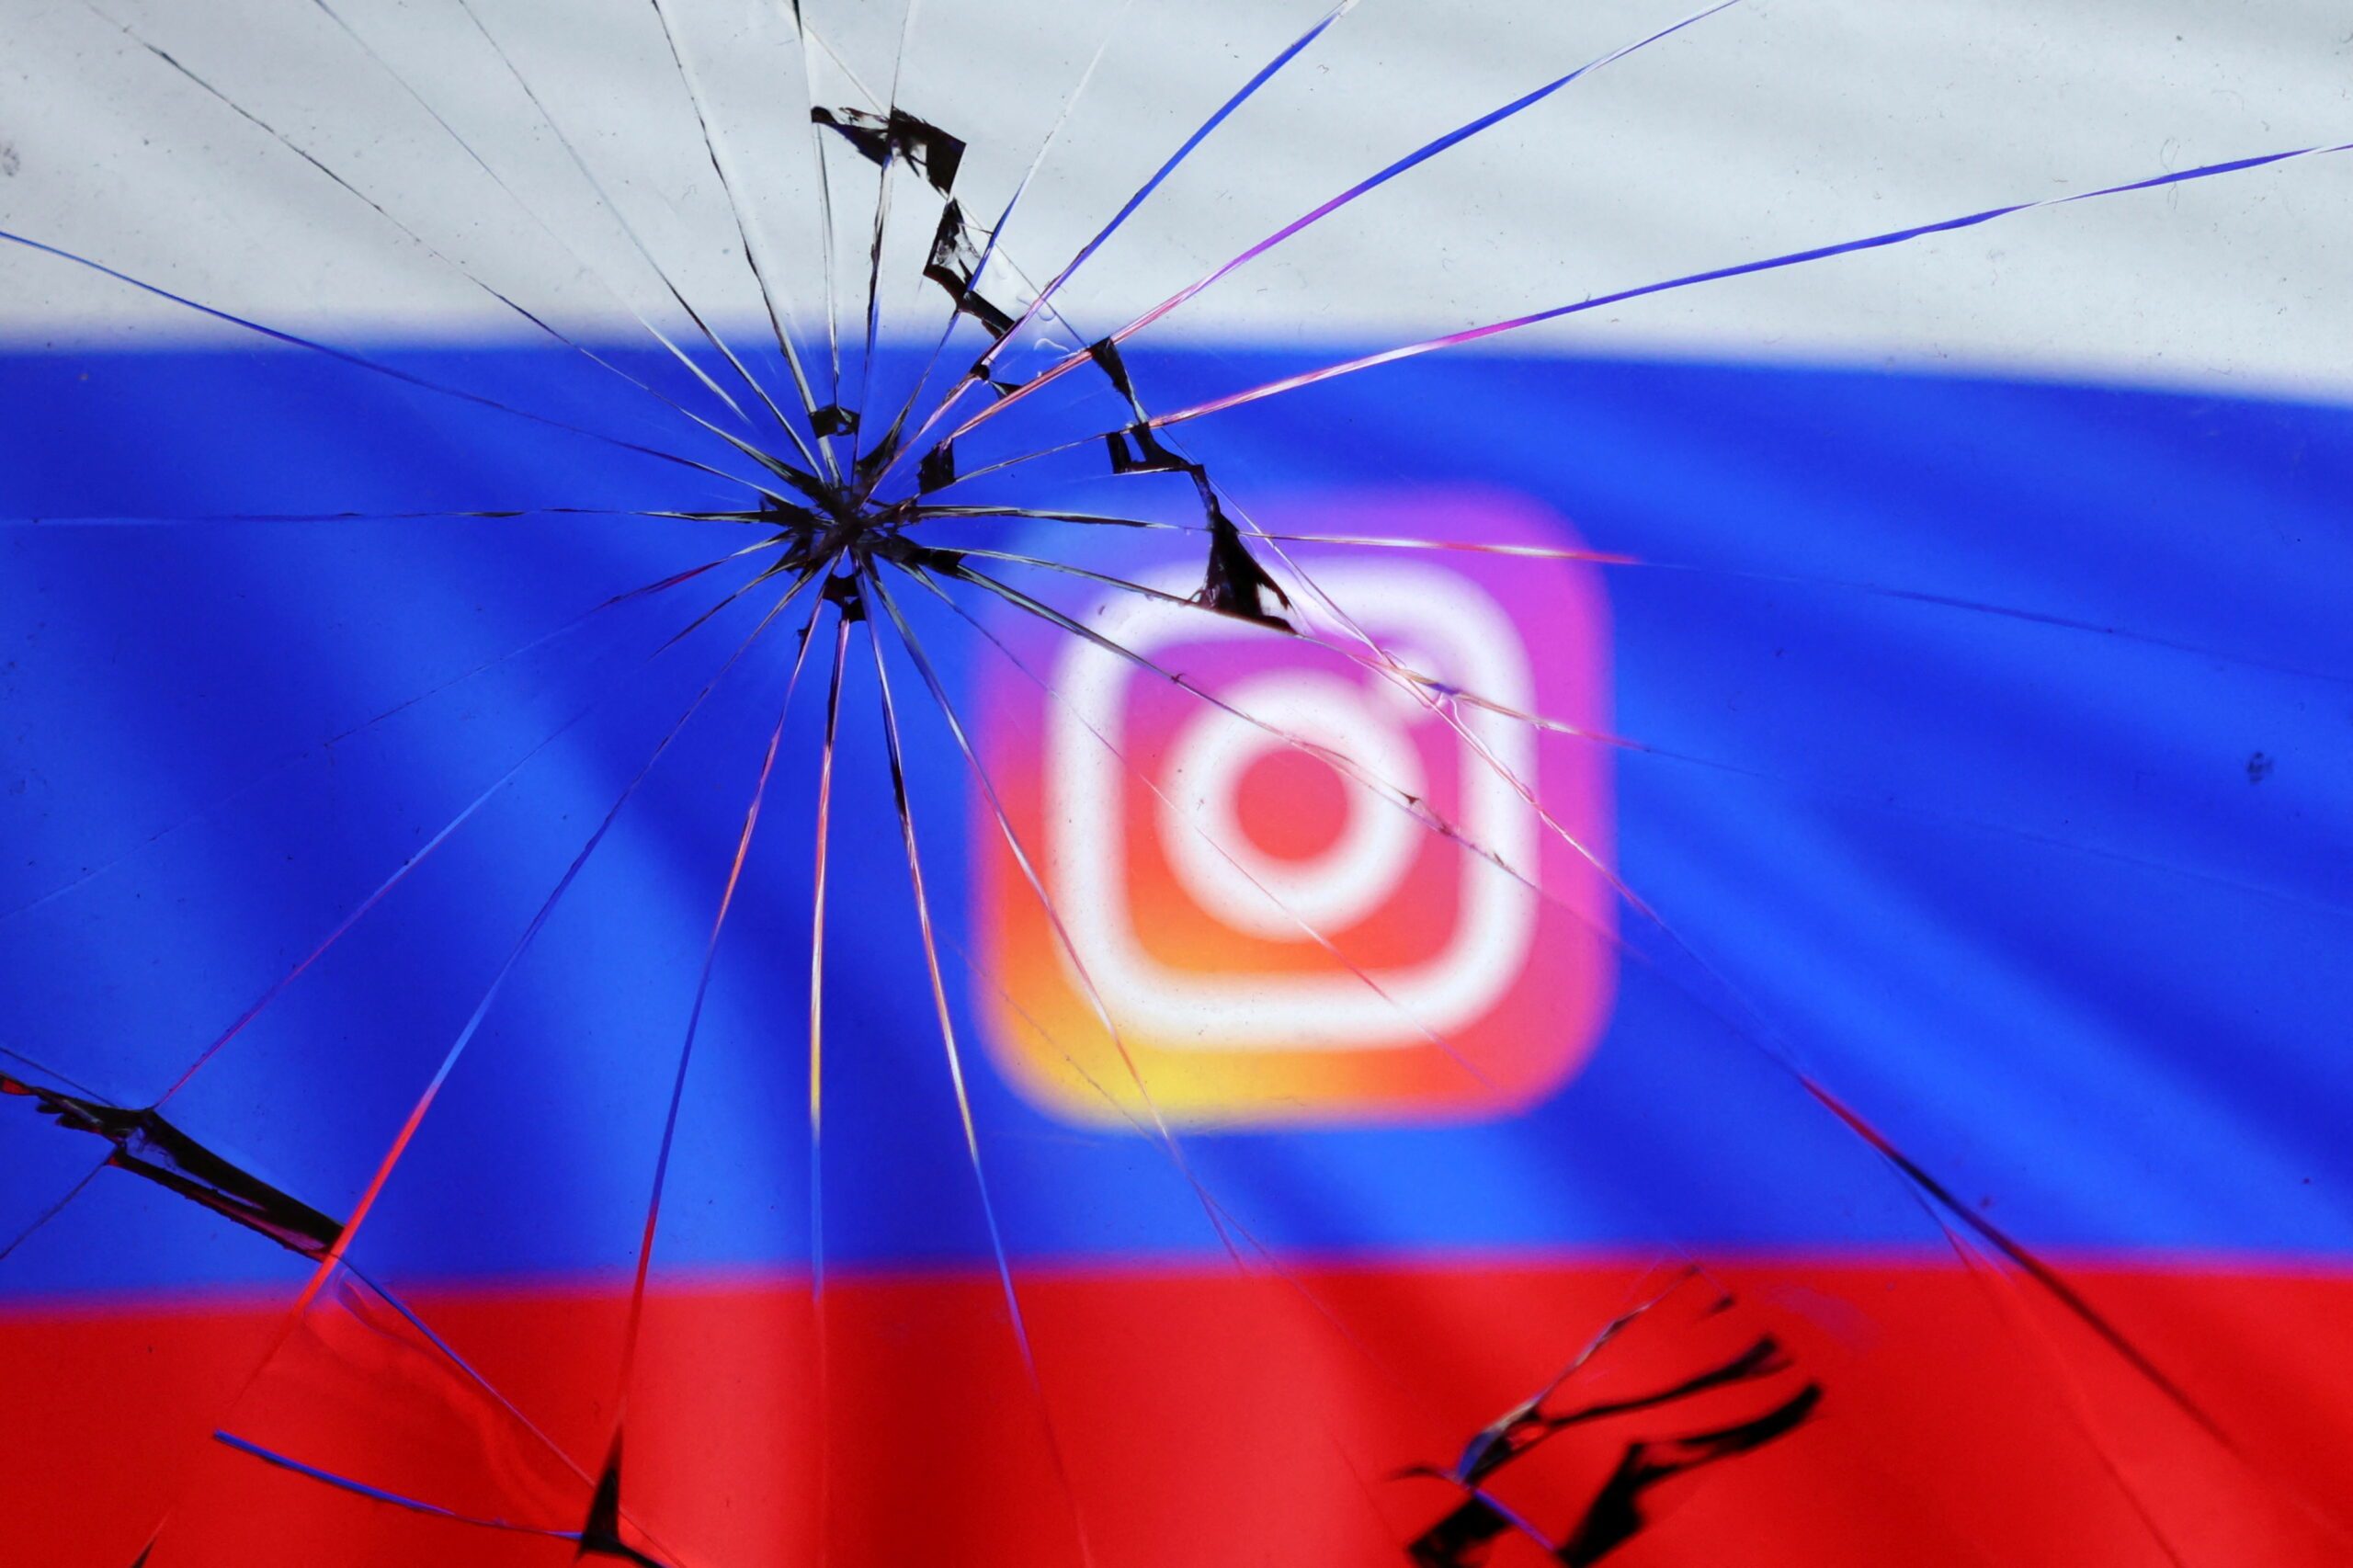 Internet watchdog confirms Instagram blocked in Russia